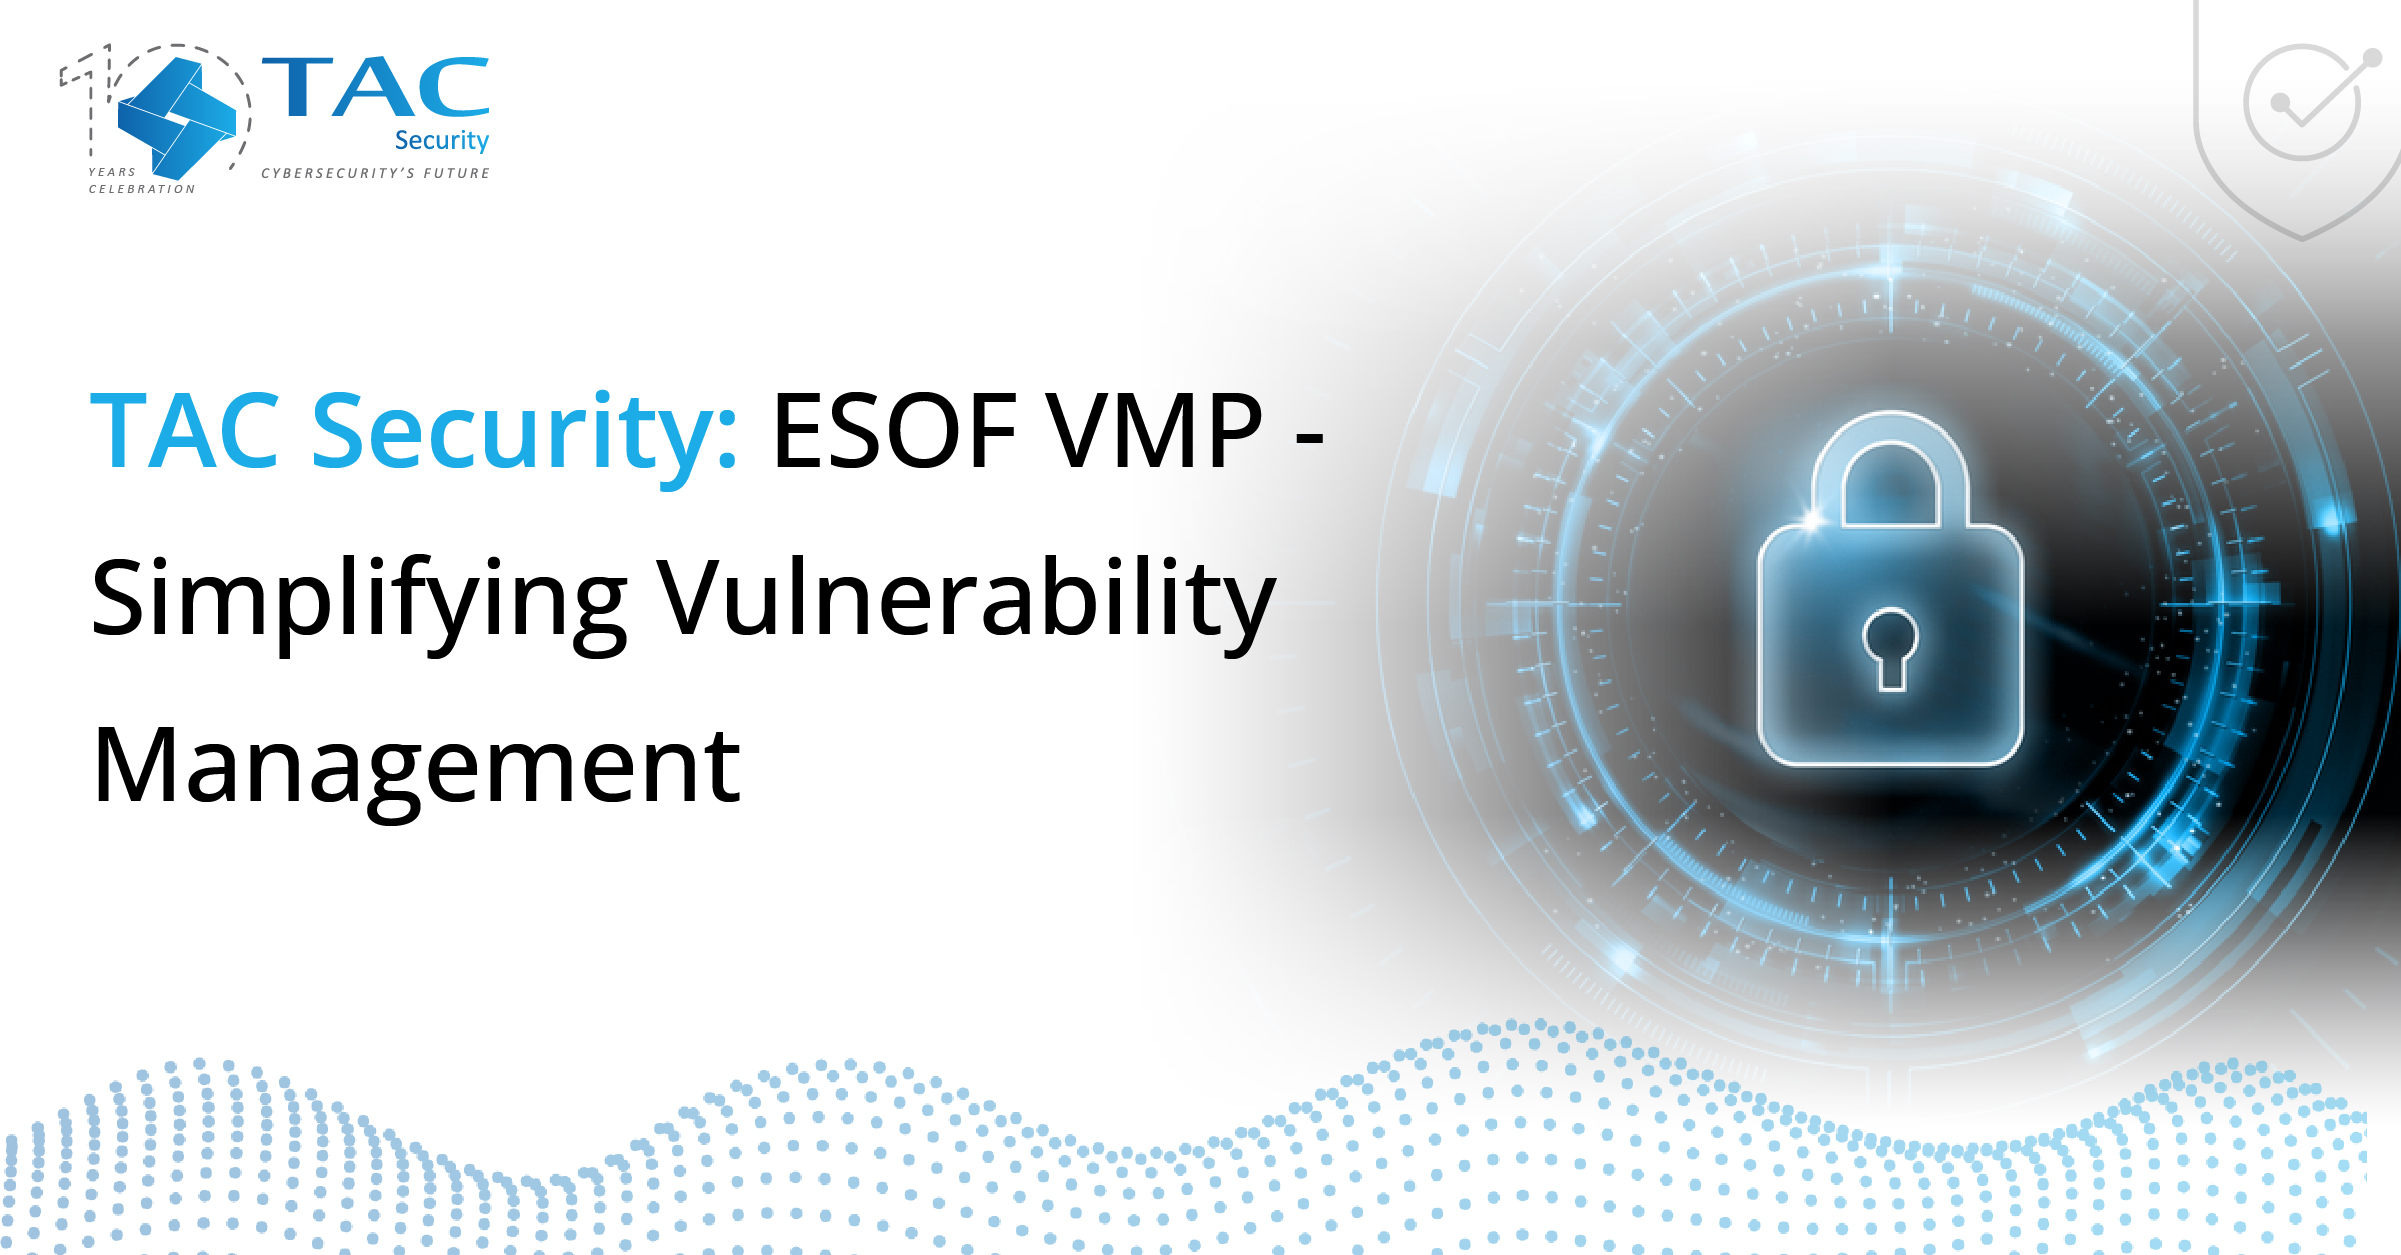 ESOF VMP simplifying vulnerability management